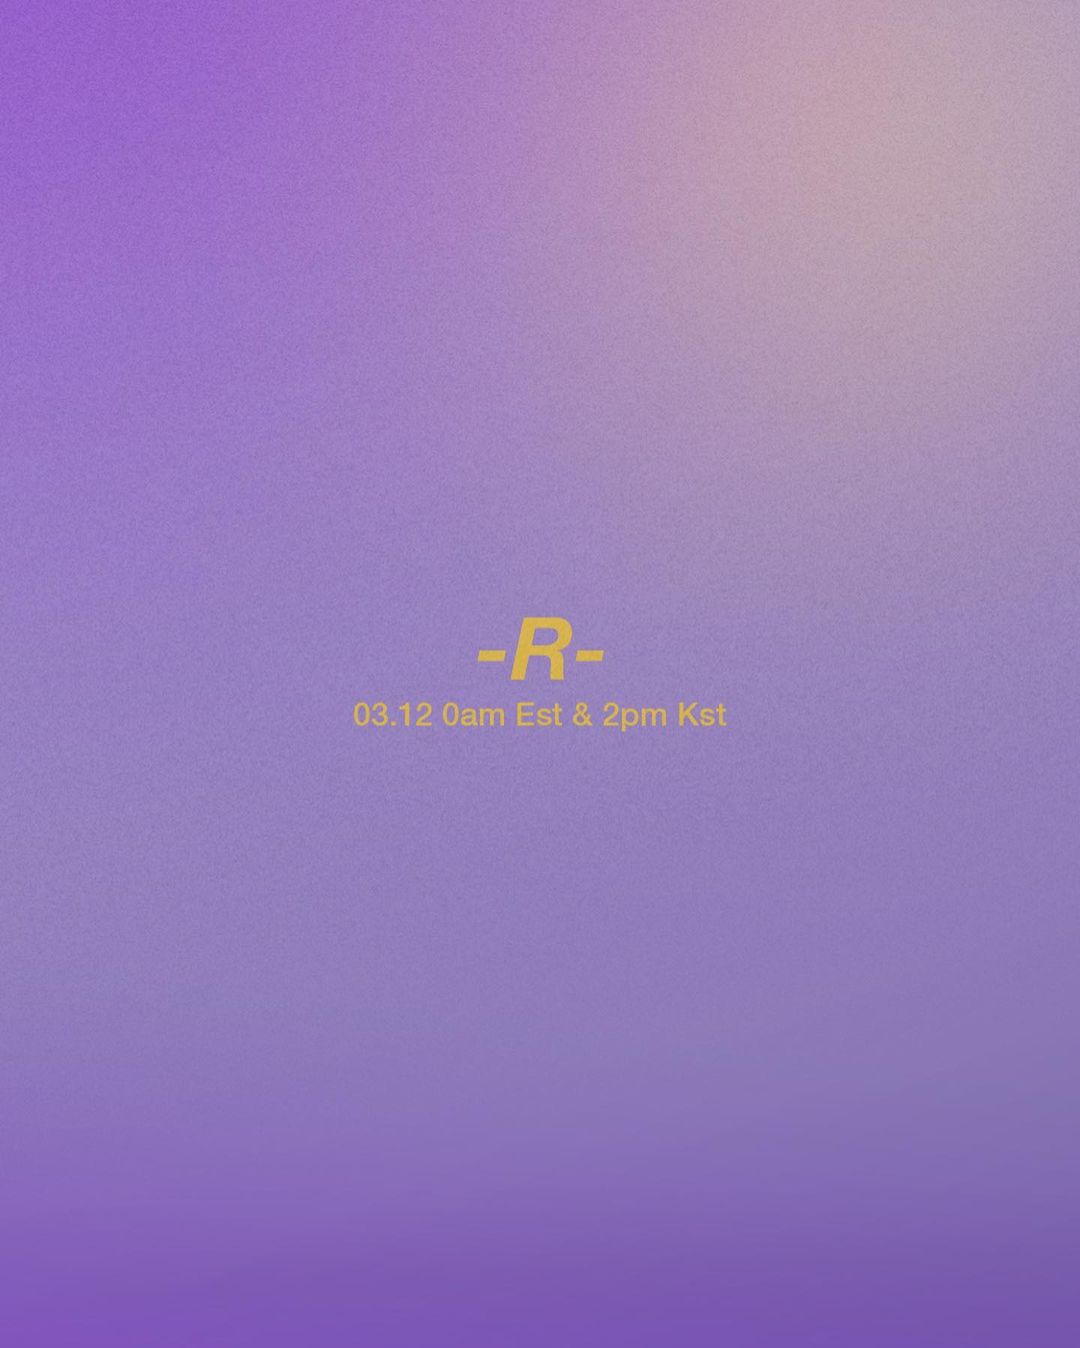 #ROSÉ #로제 #BLACKPINK #블랙핑크 #FirstSingleAlbum #R #20210312_0amEST #20210312_2pmKS…